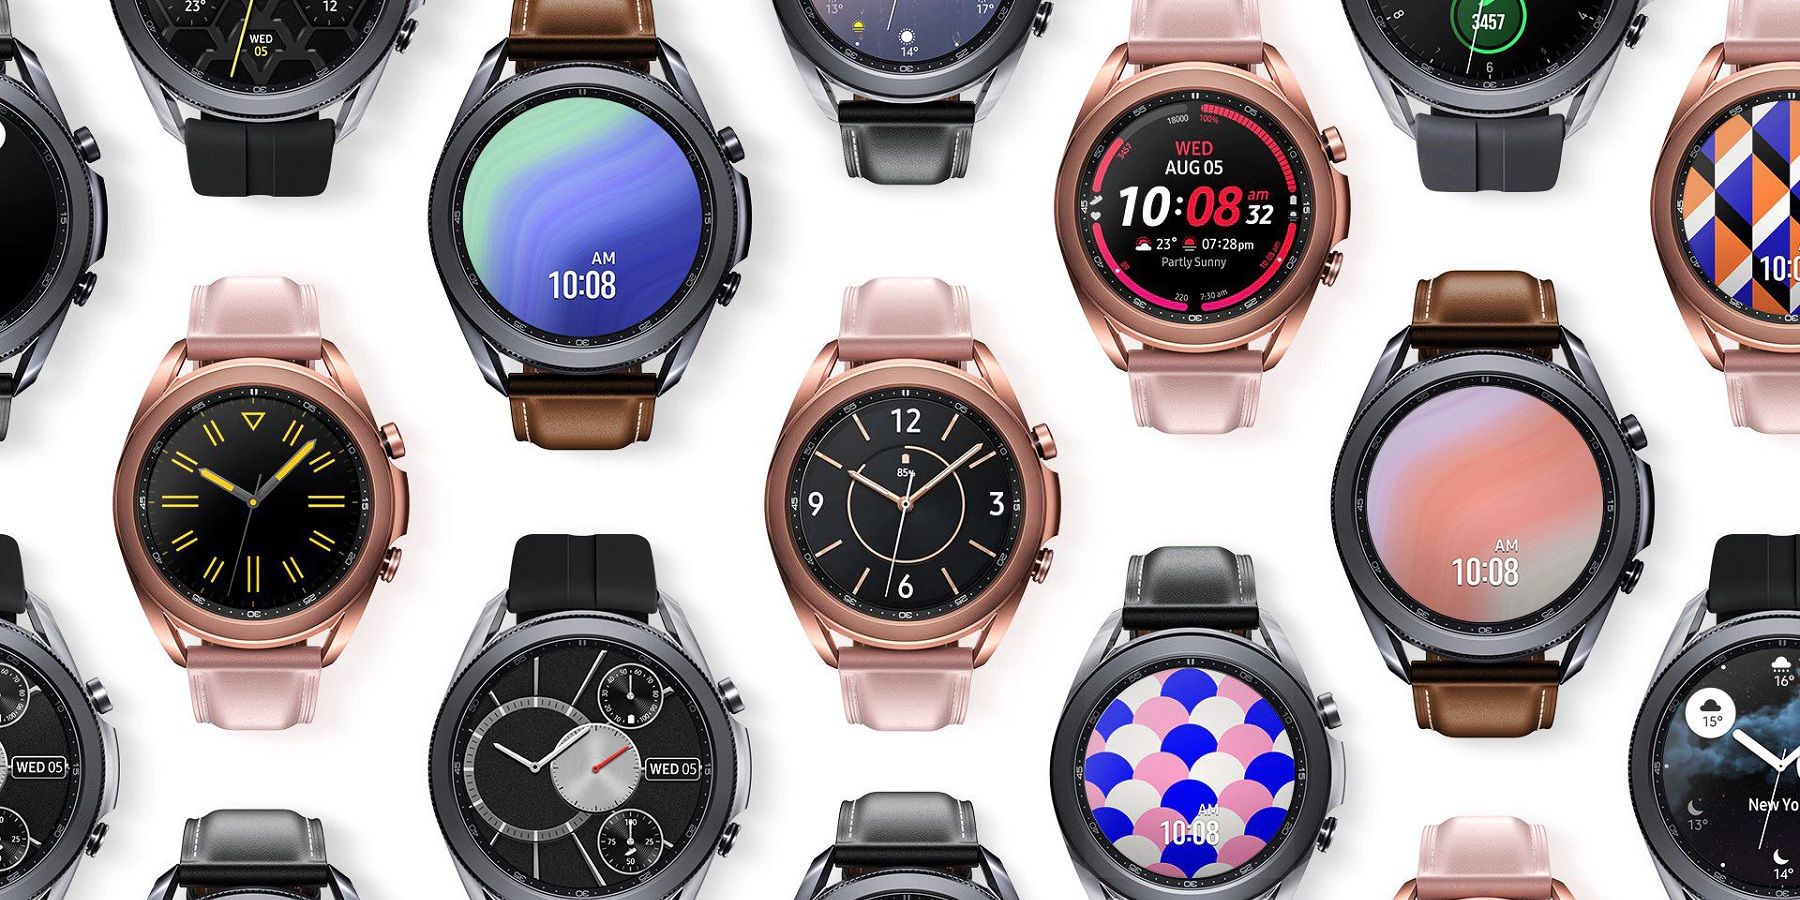 Samsung Might Make Galaxy Watch 5 With Titanium & Sapphire Glass